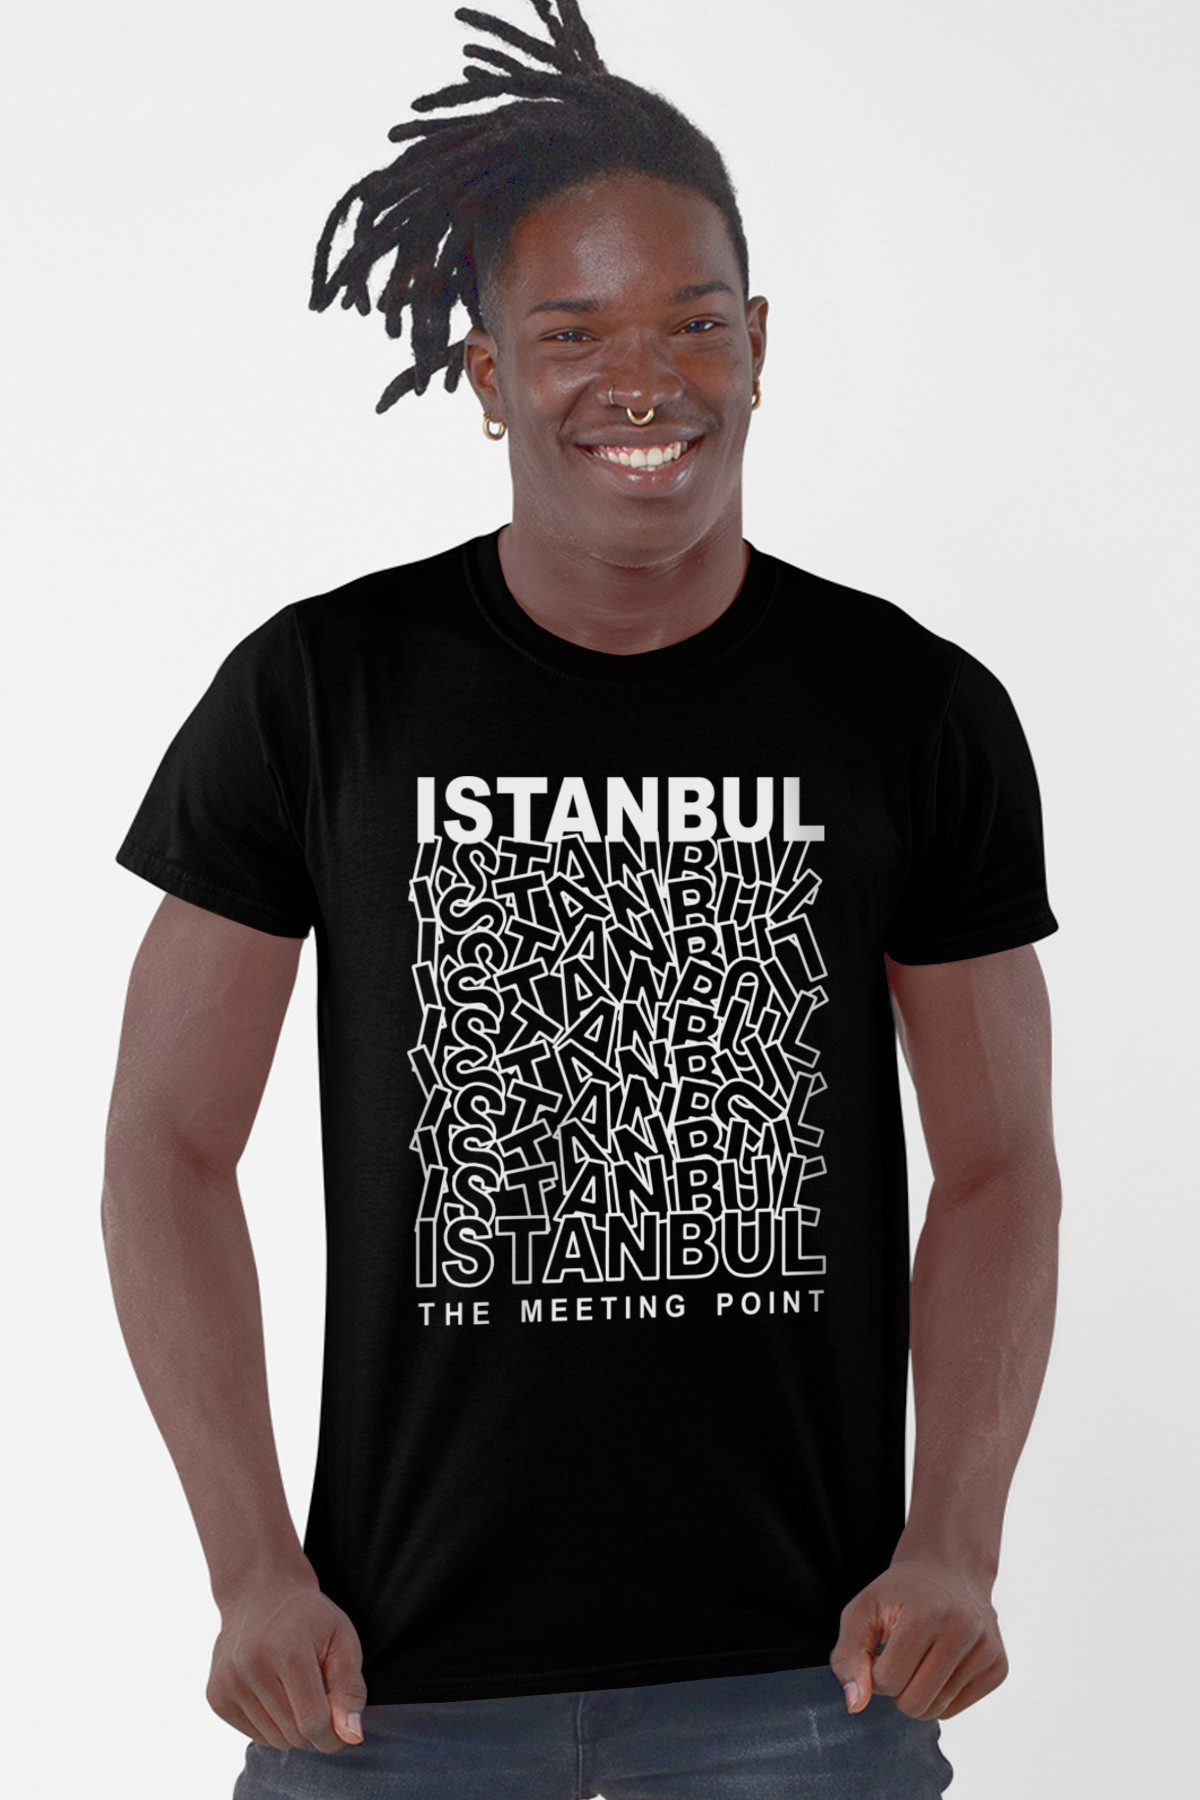 Karışık İstanbul Siyah Kısa Kollu Erkek T-shirt